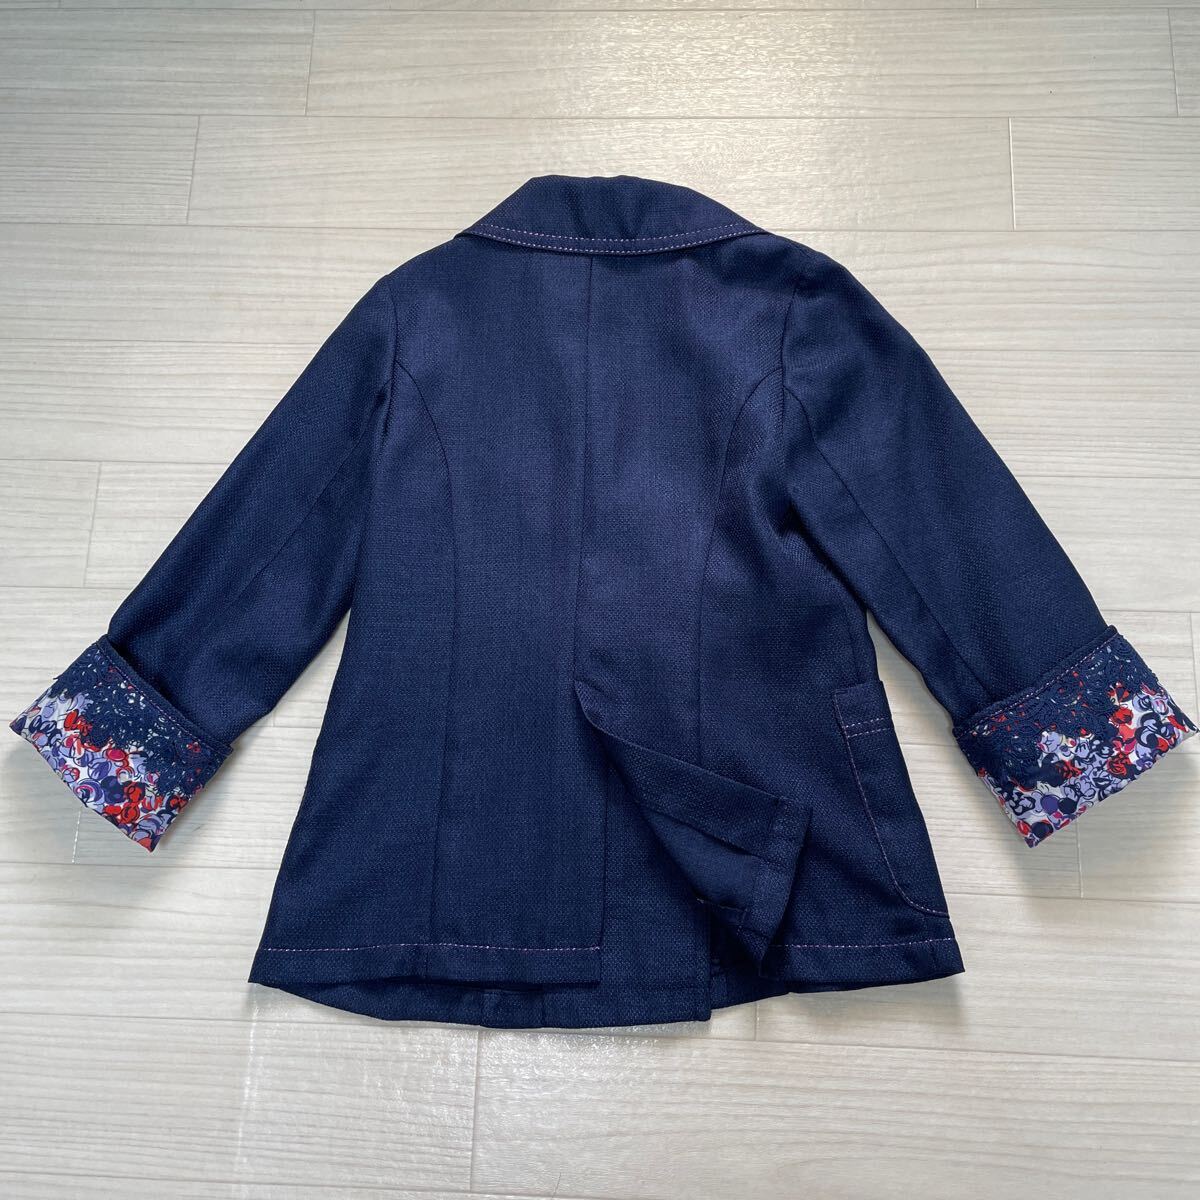 ANNA SUI mini アナスイミニ フォーマル ジャケット ワッペン 濃紺 入学式 卒園式 式典 サイズ130 美品_画像9